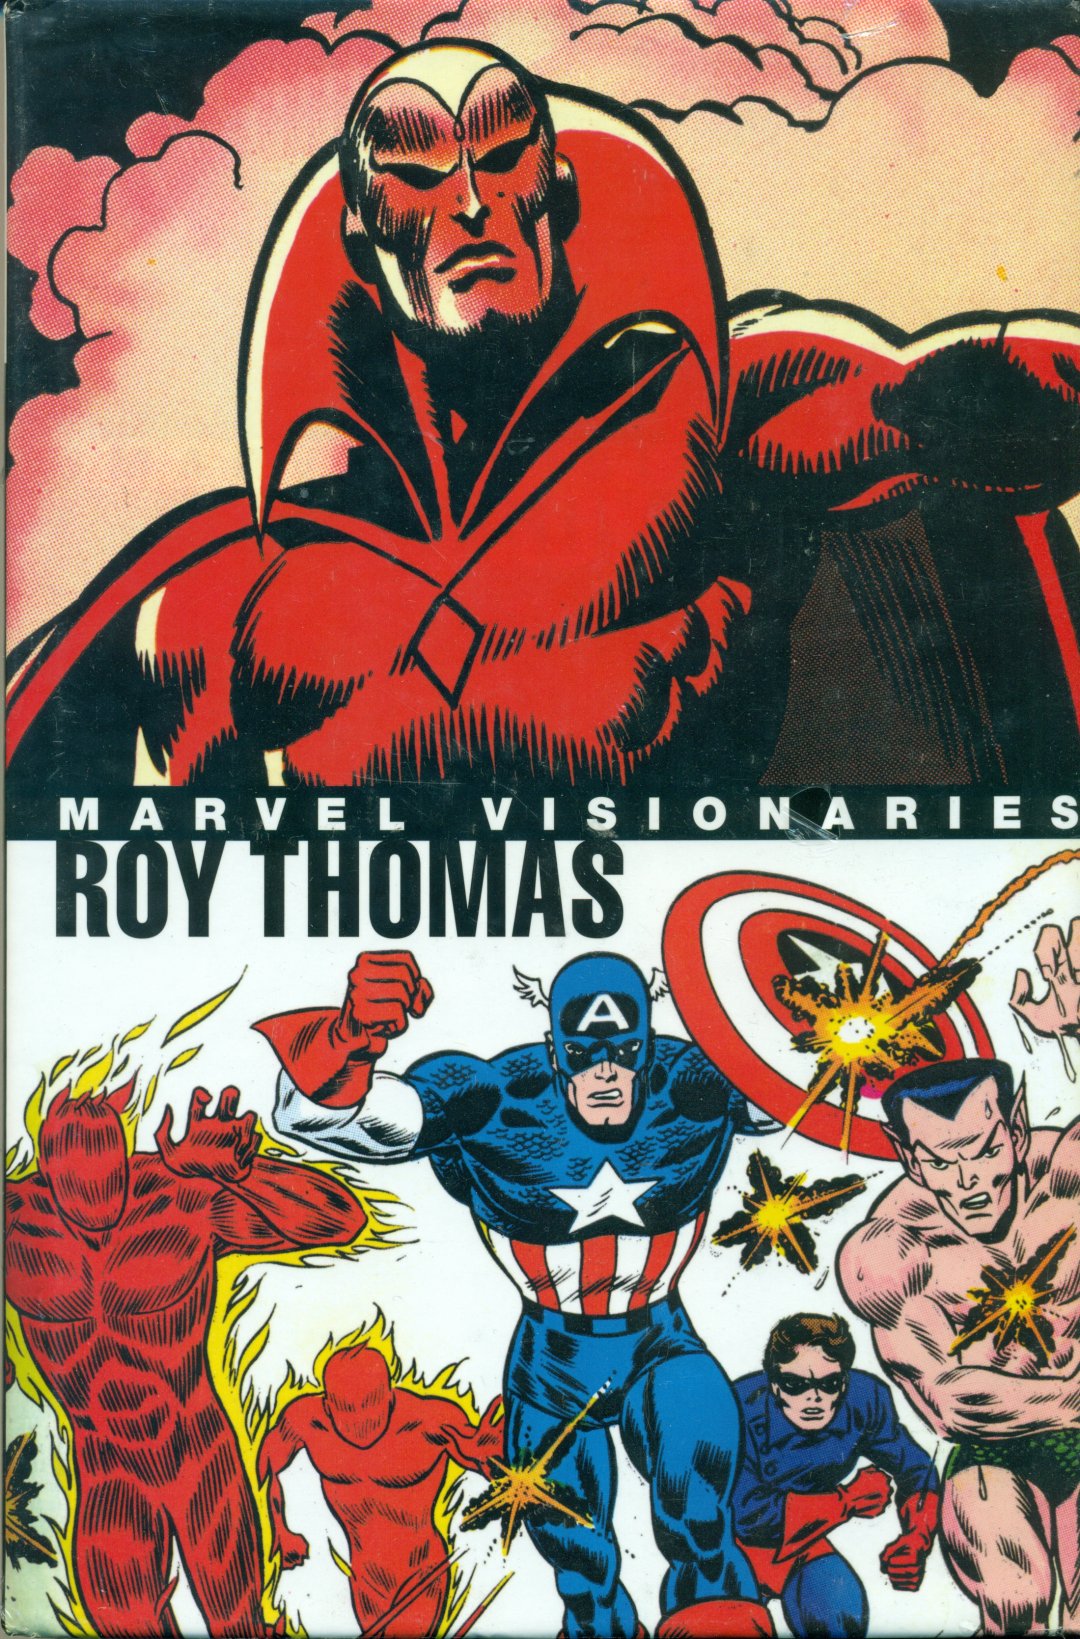 Marvel Visionaires Roy Thomas HC